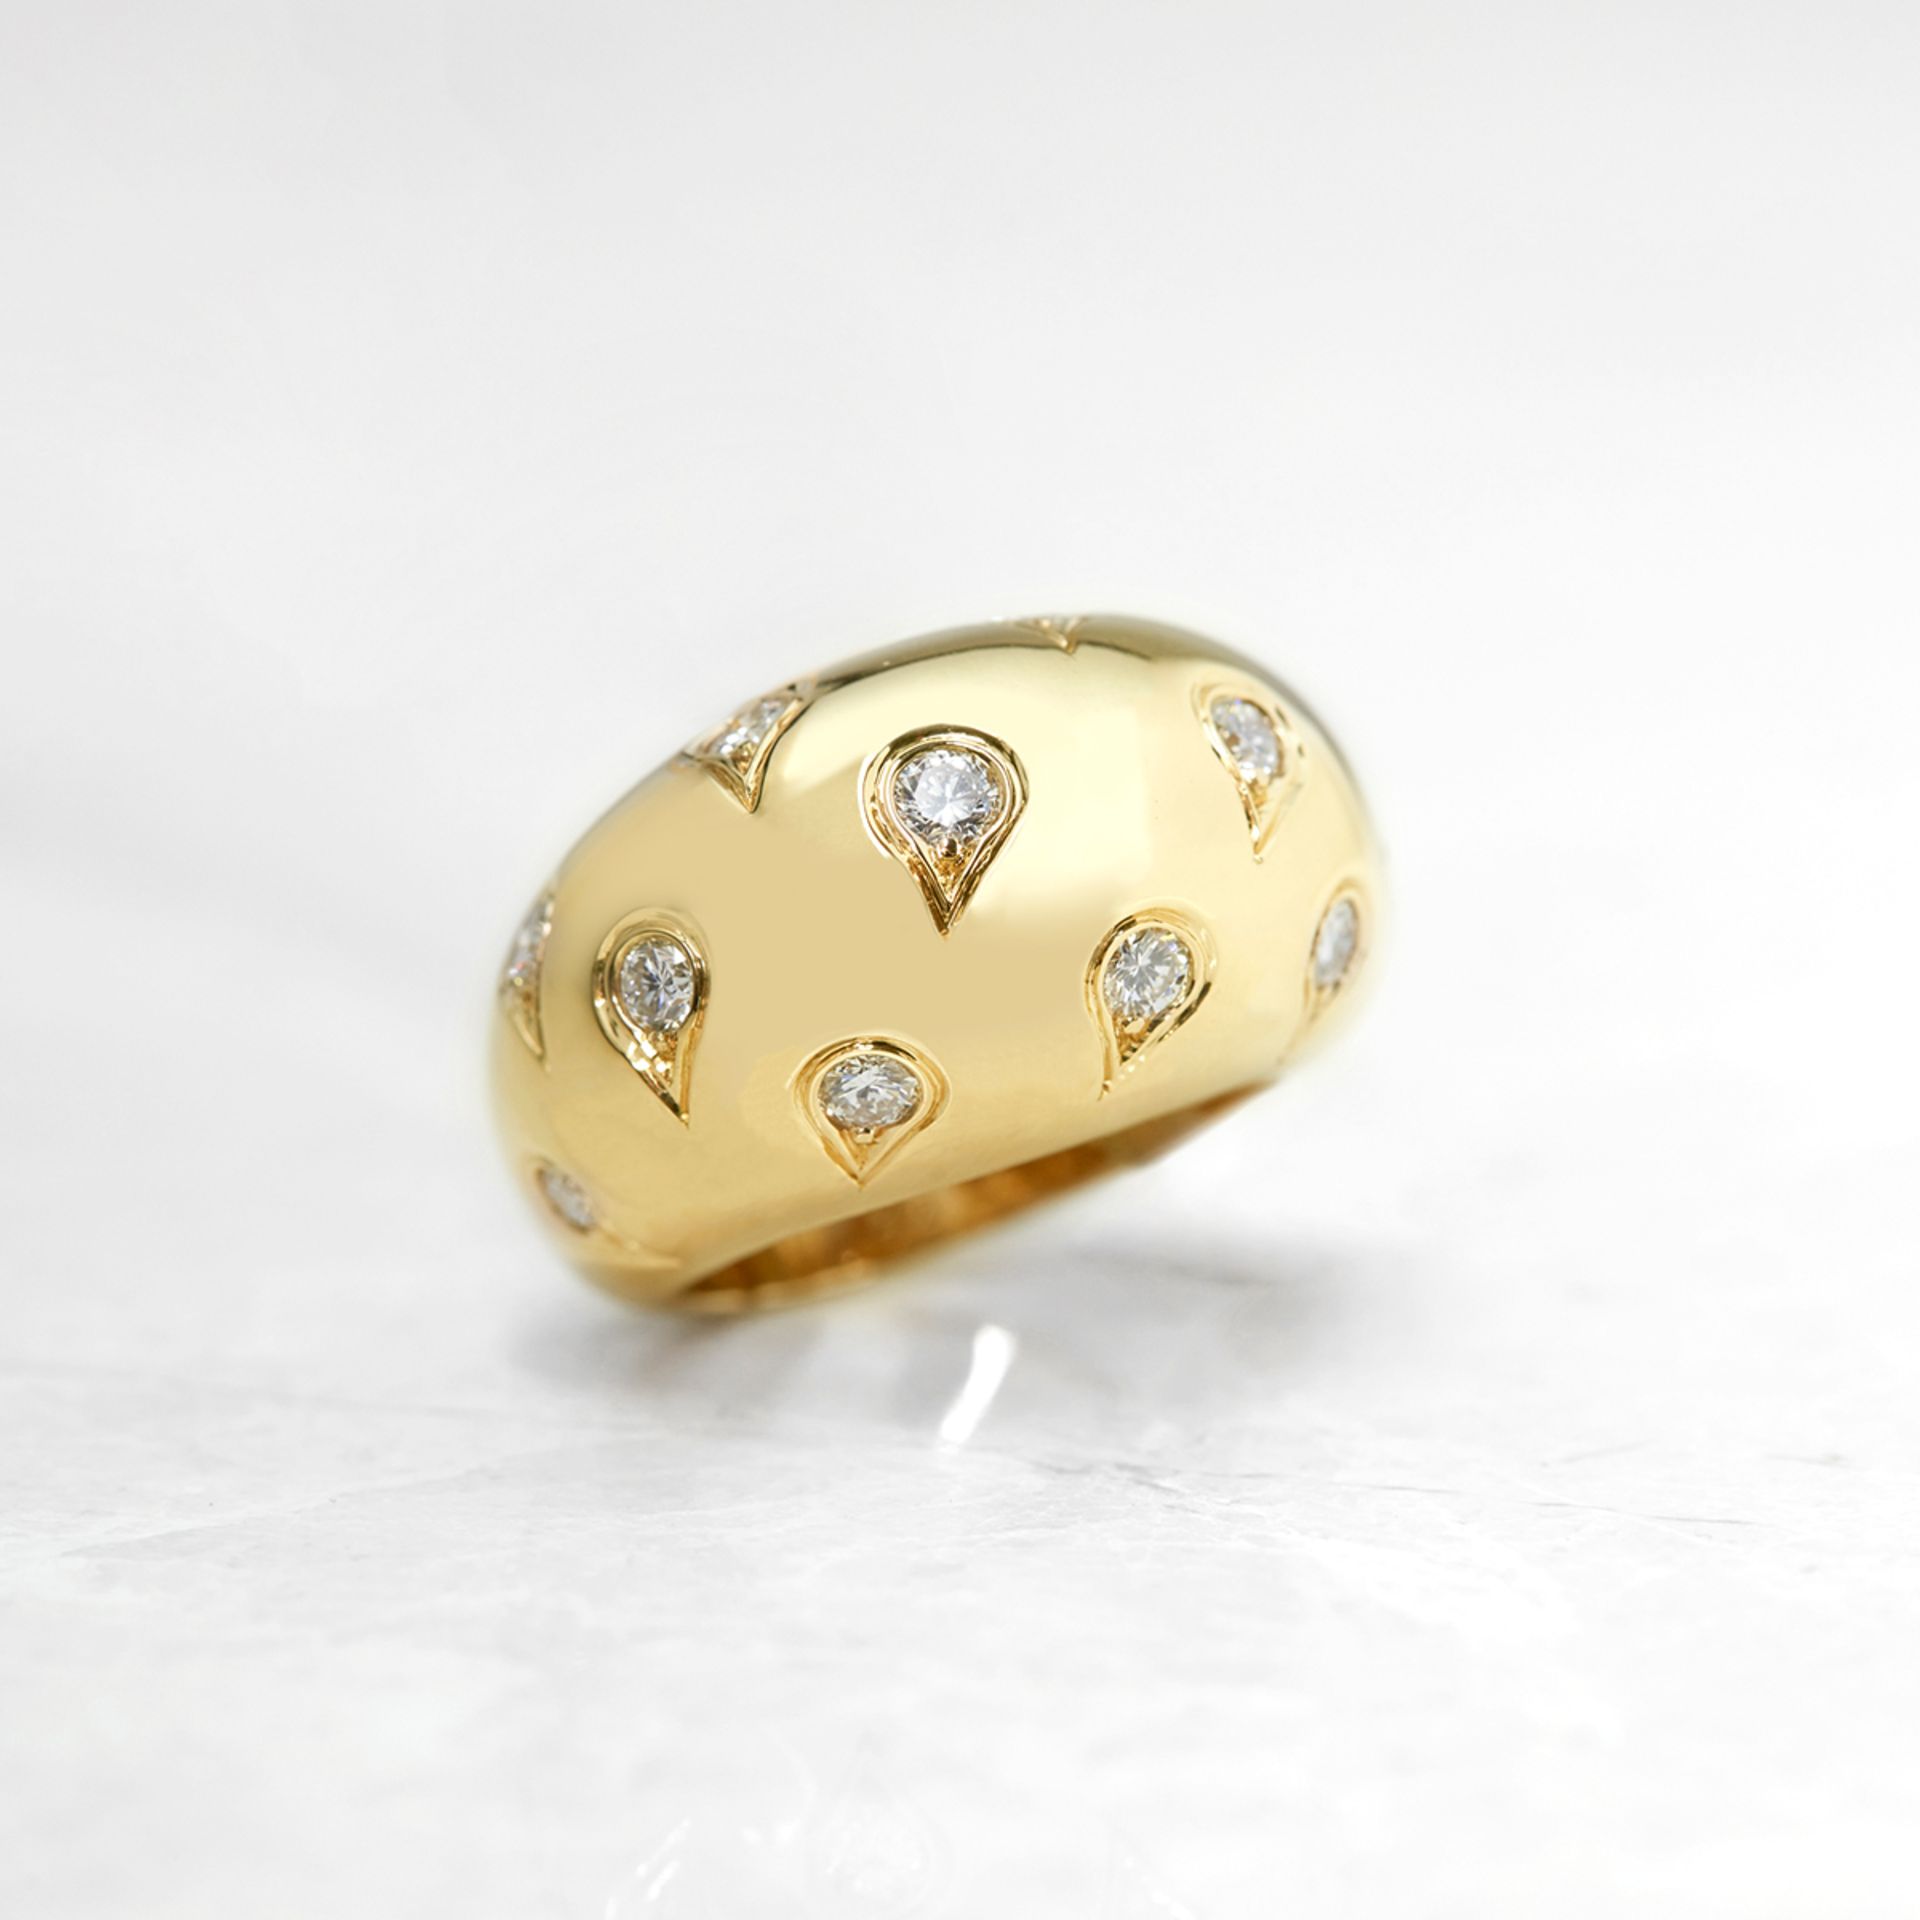 Cartier 18k Yellow Gold 1.00ct Diamond Bombe Ring - Image 3 of 7